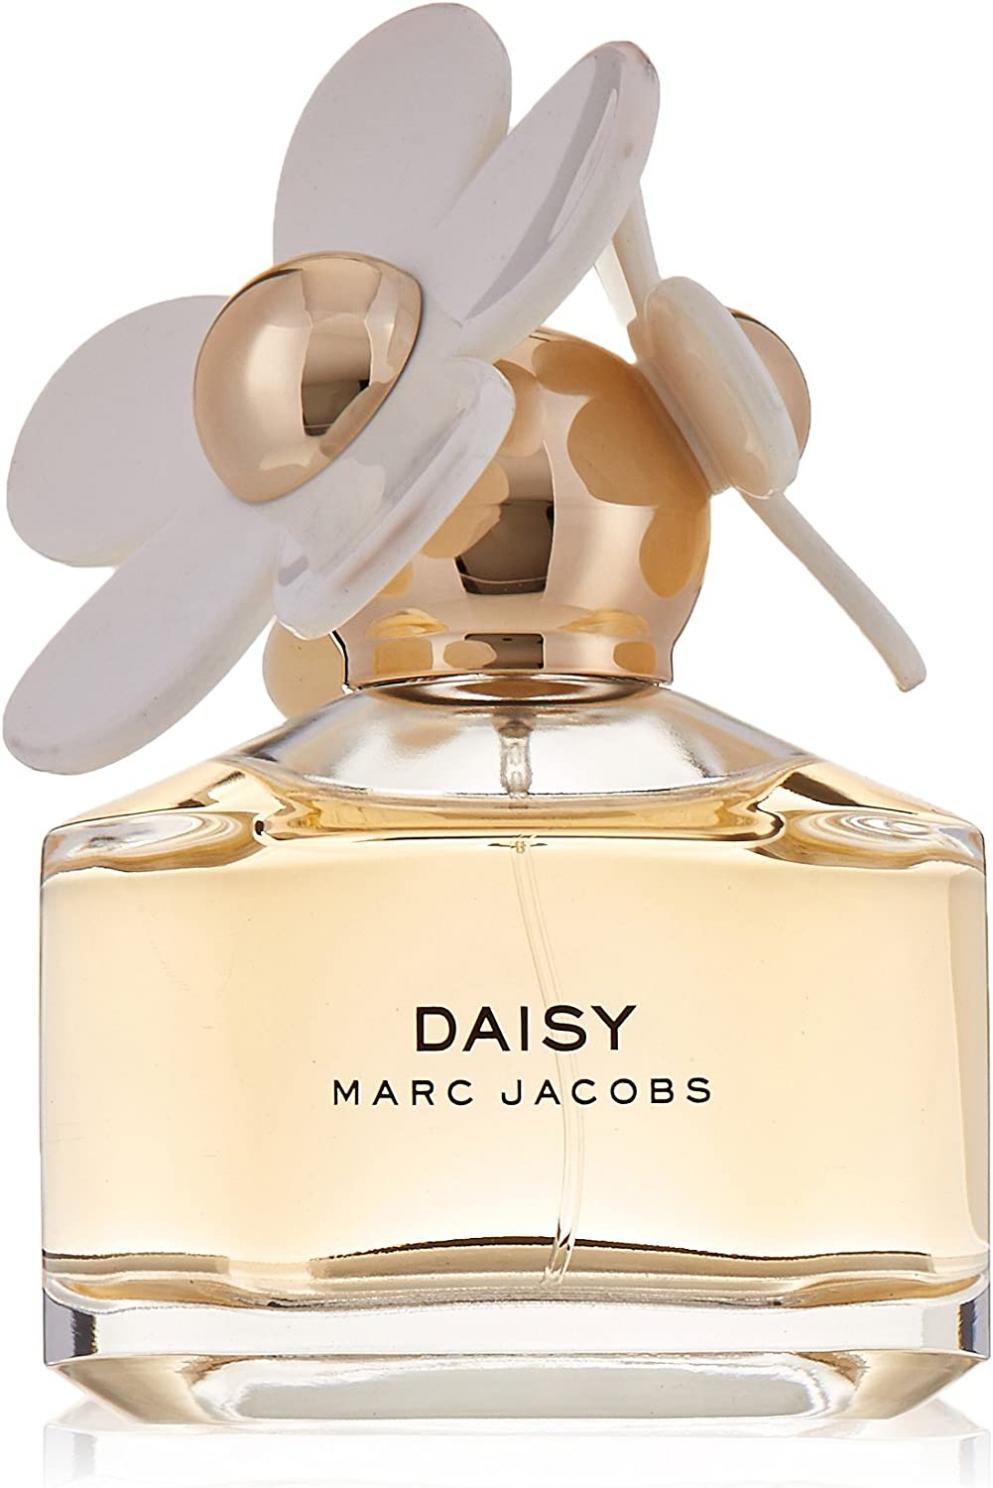 Marc Jacobs Daisy Eau de Toilette Spray for Women, 1.7 Fluid Ounce